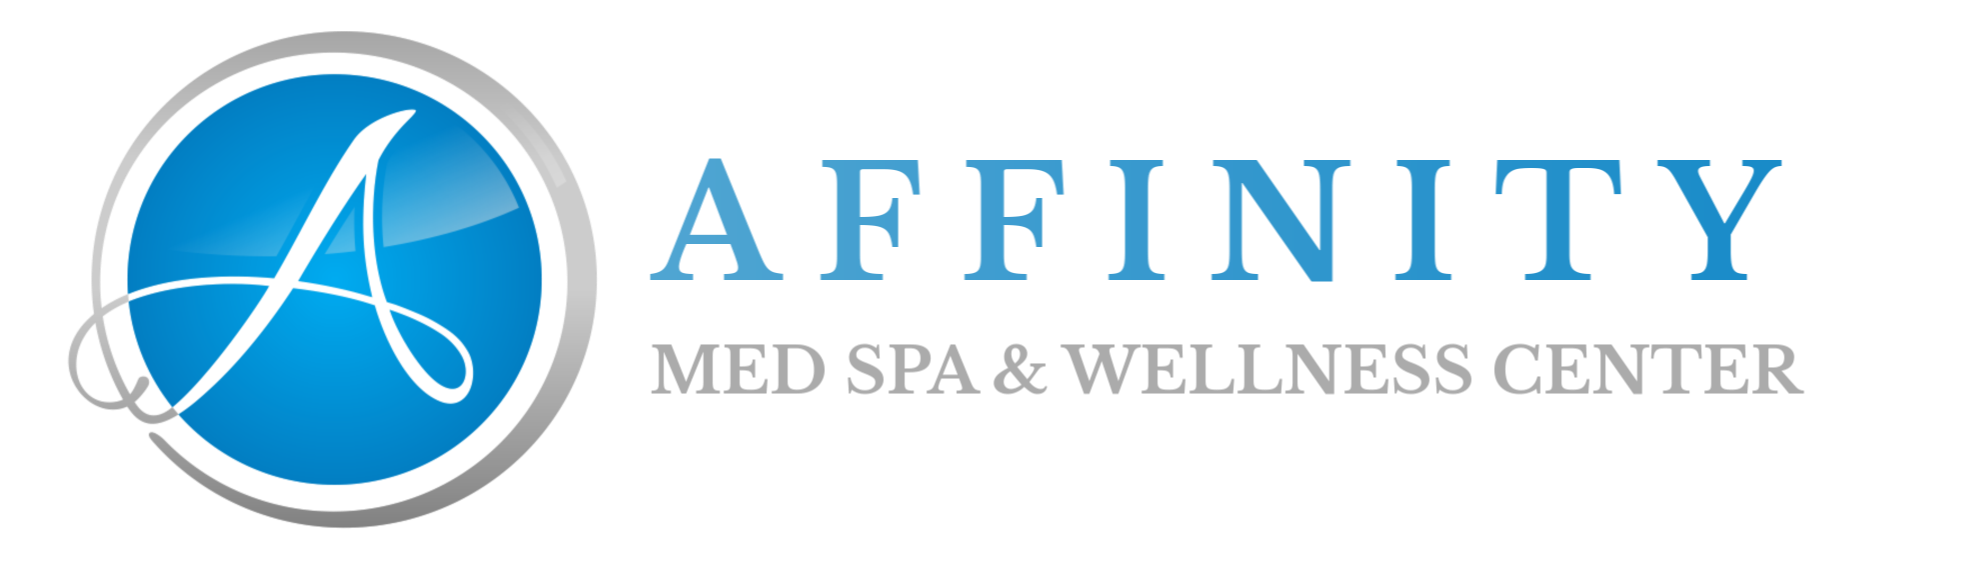 Affinity Med Spa & Wellness Center